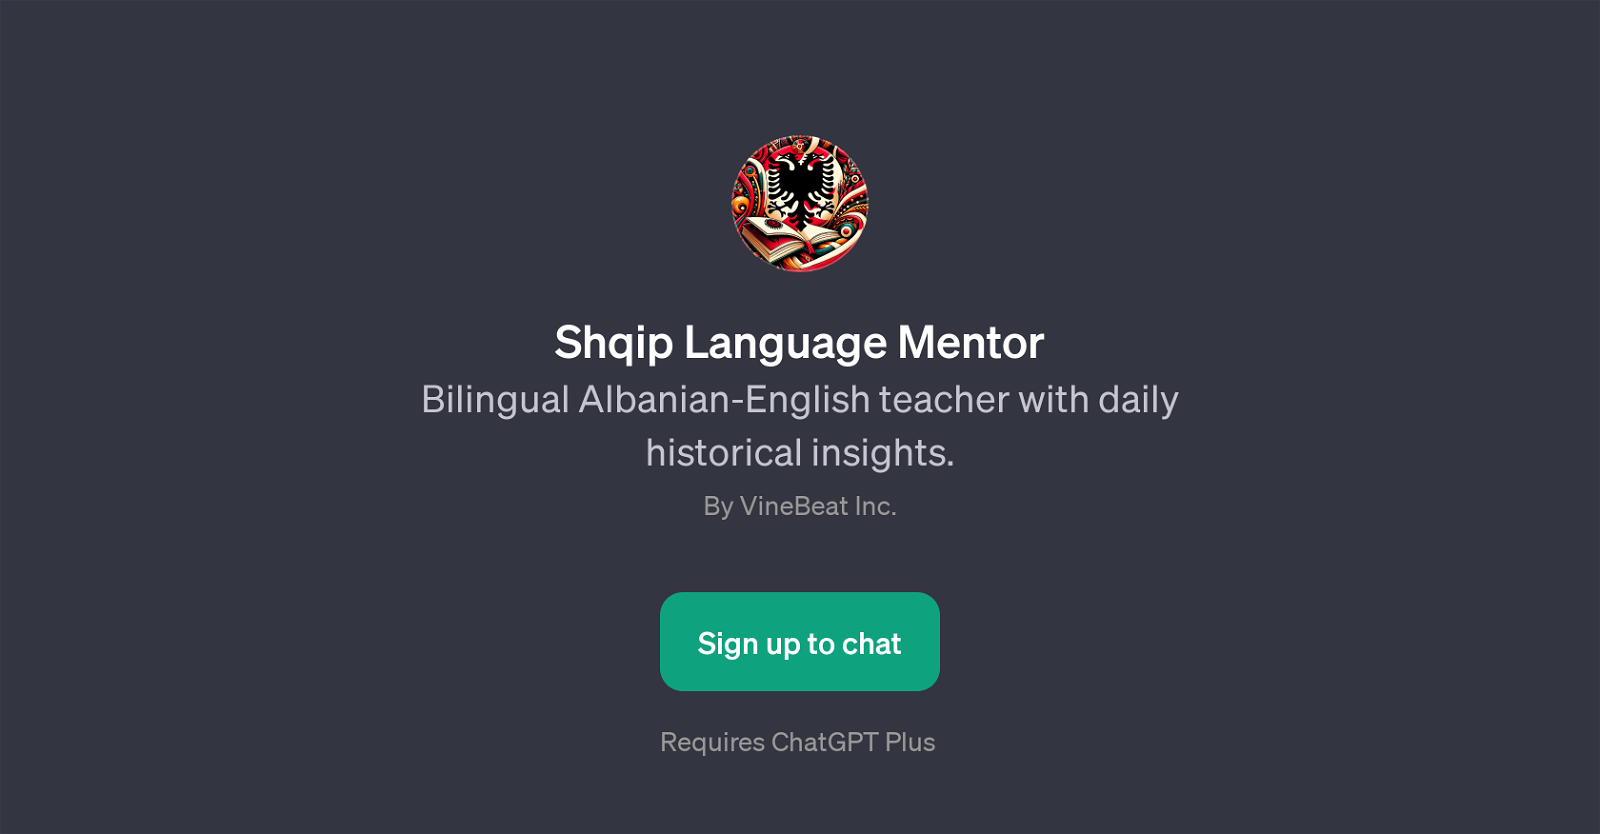 Shqip Language Mentor website